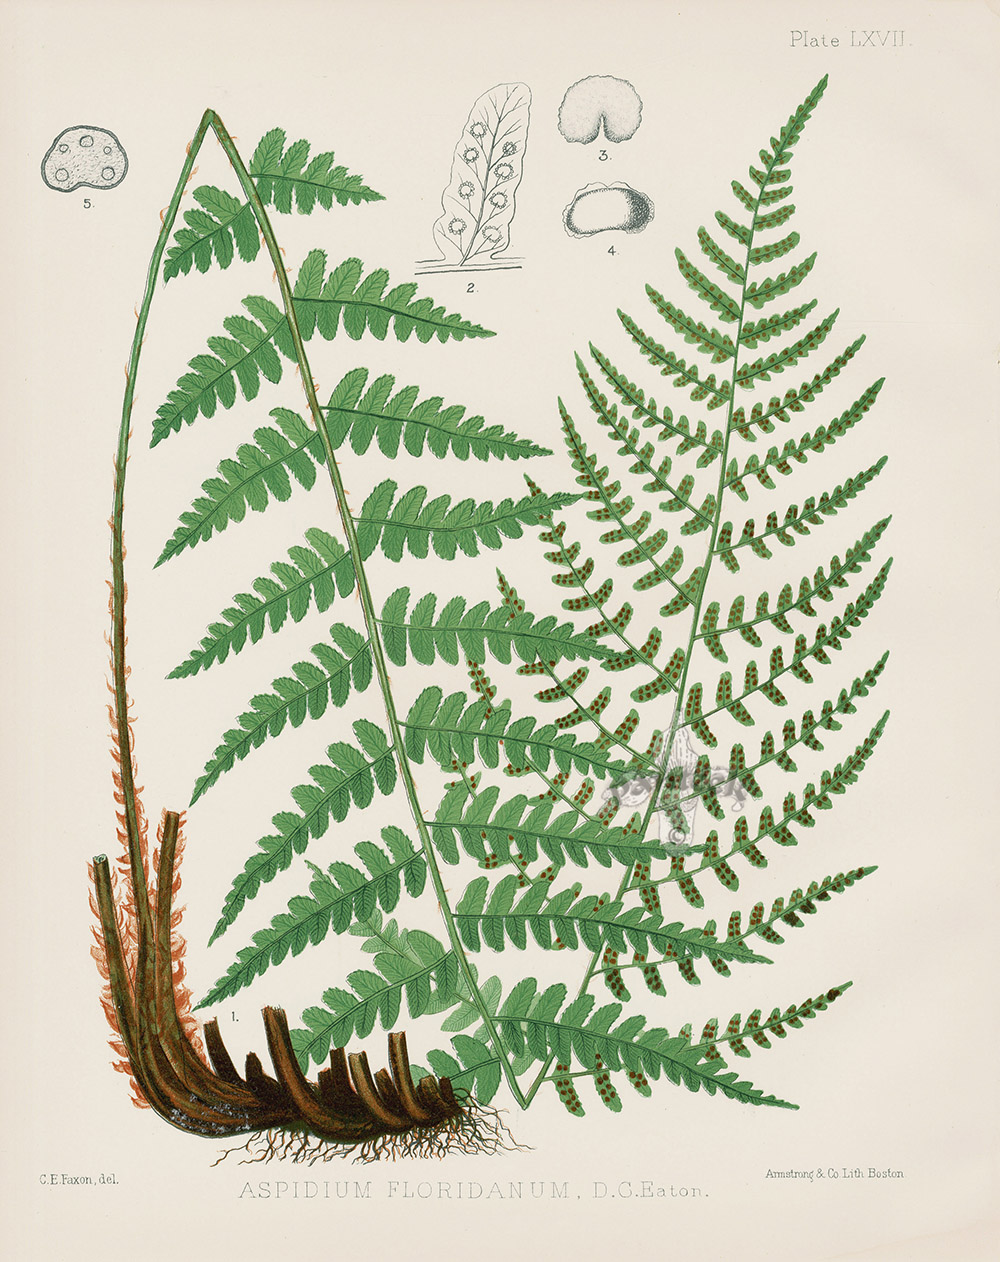 Aspidum Floridanum from Antique Fern Lithographs